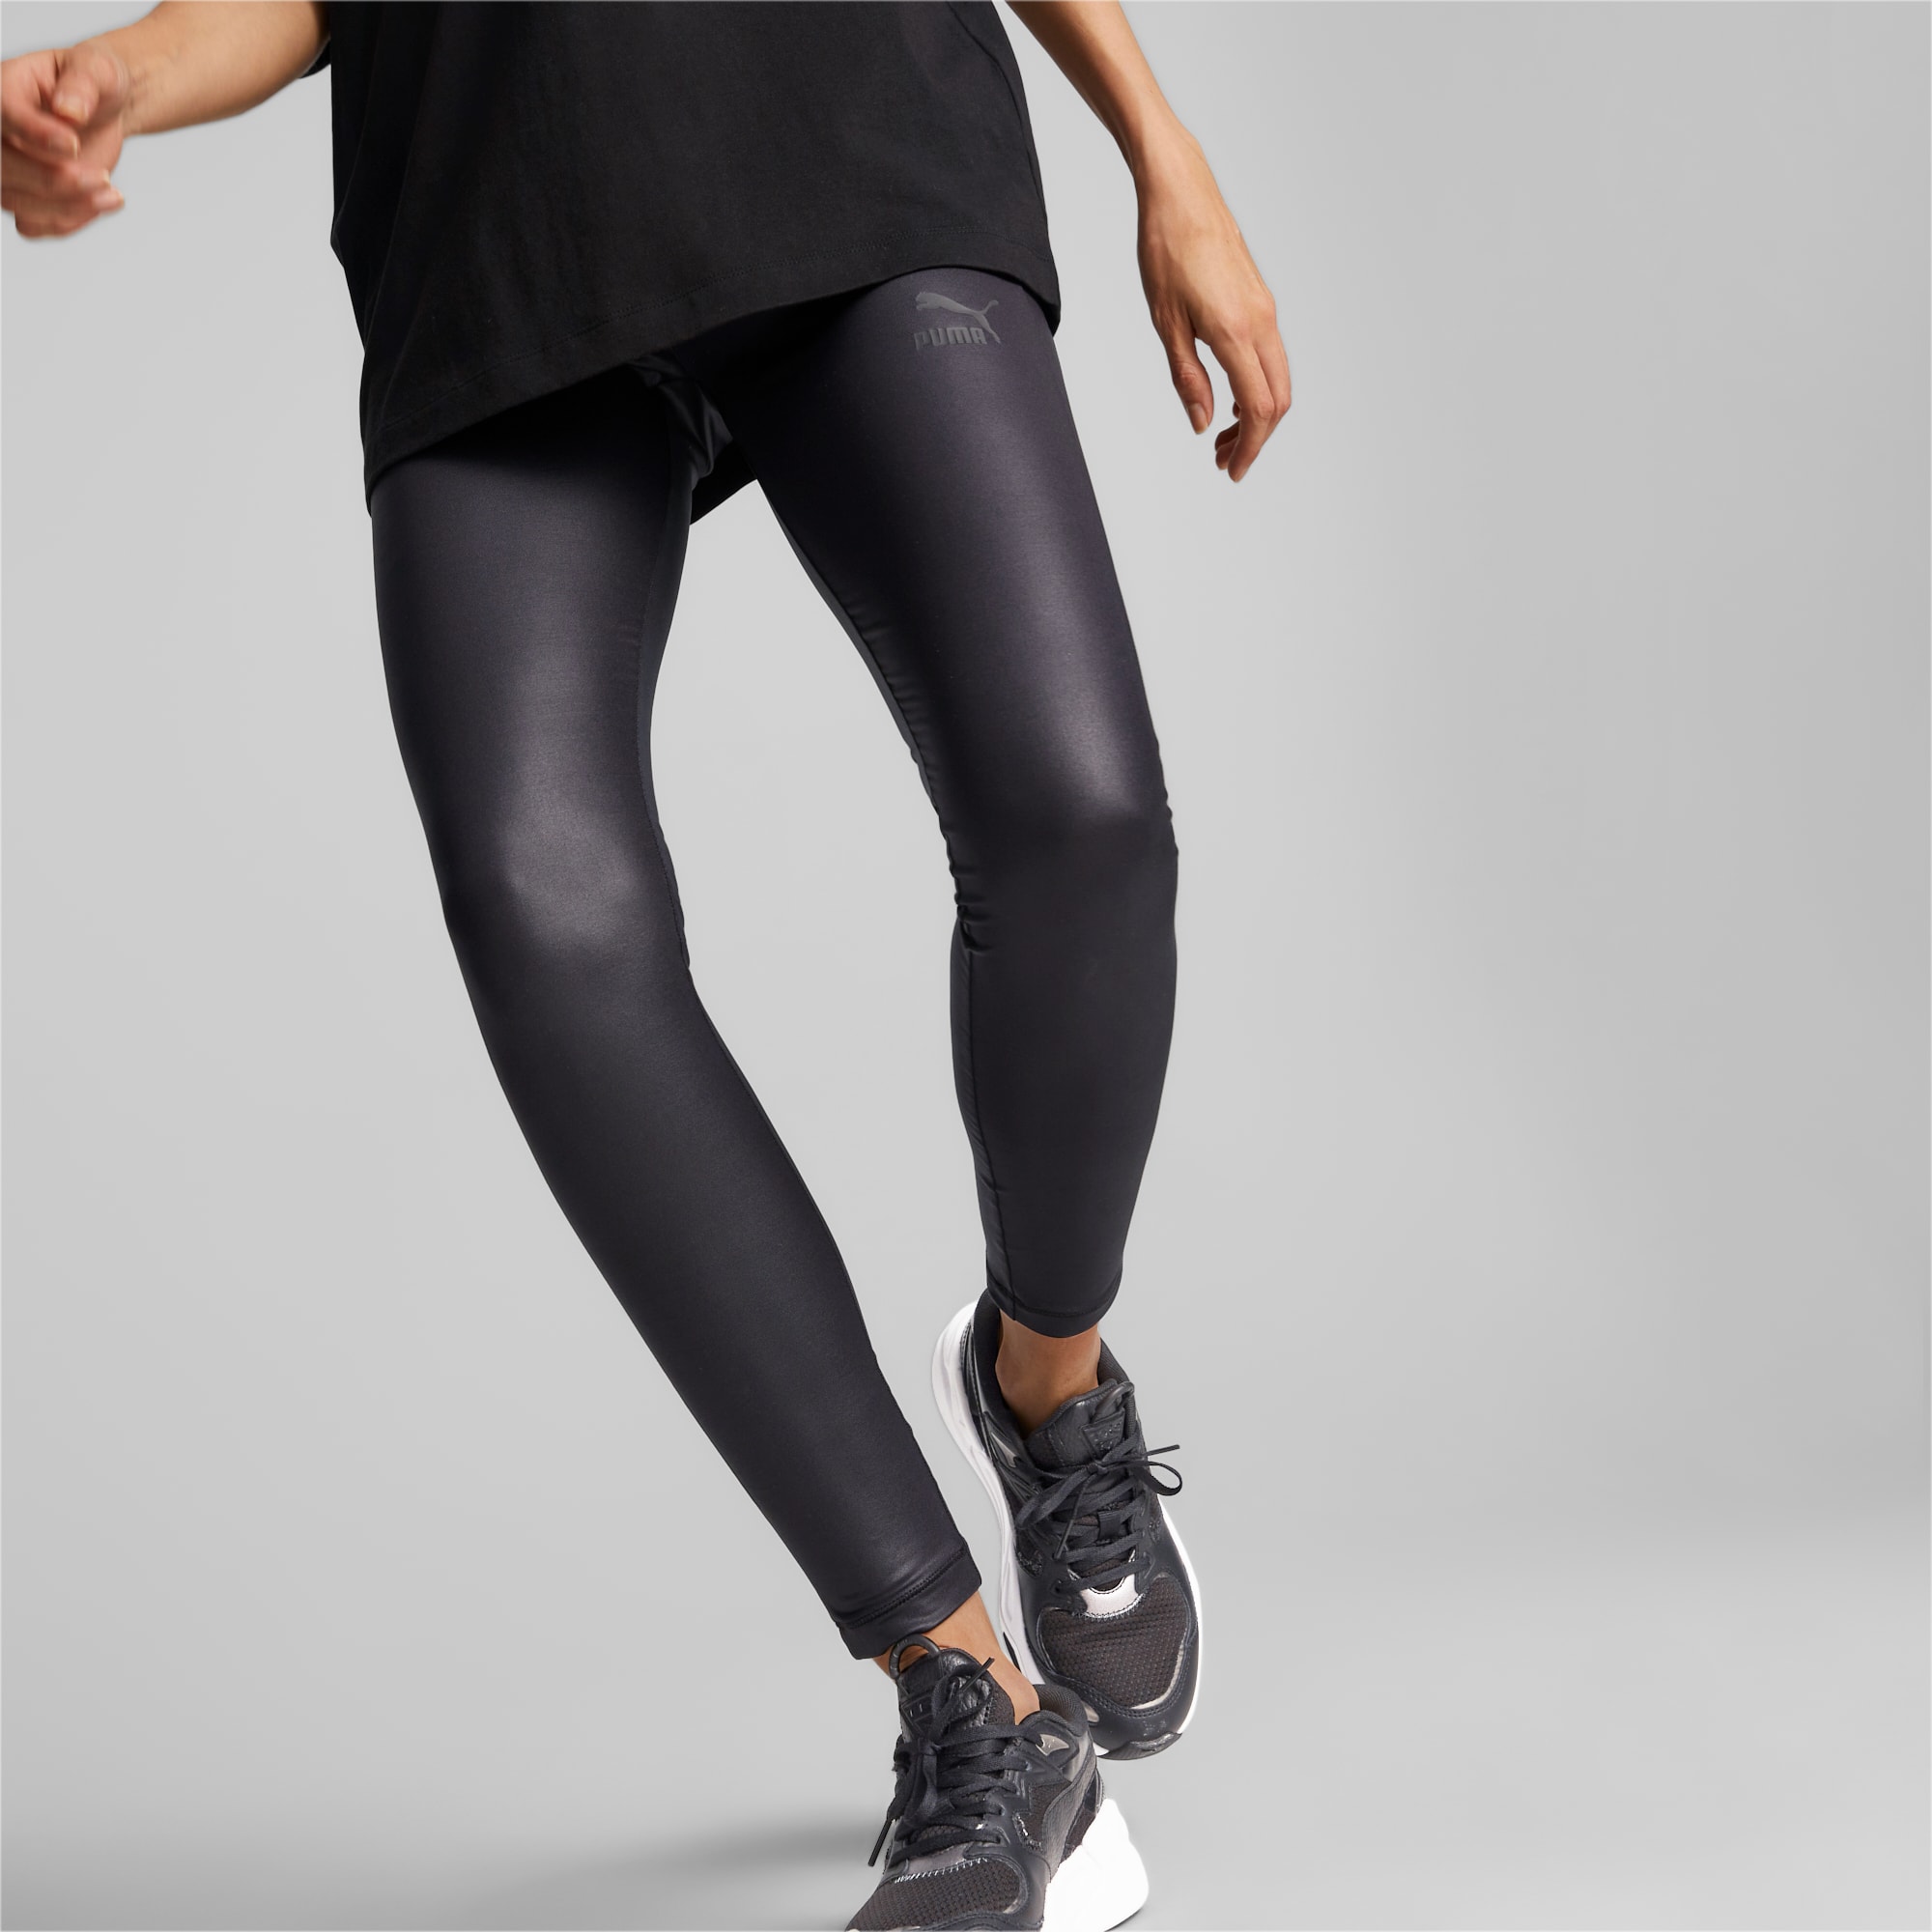 Black Shiny Leggings